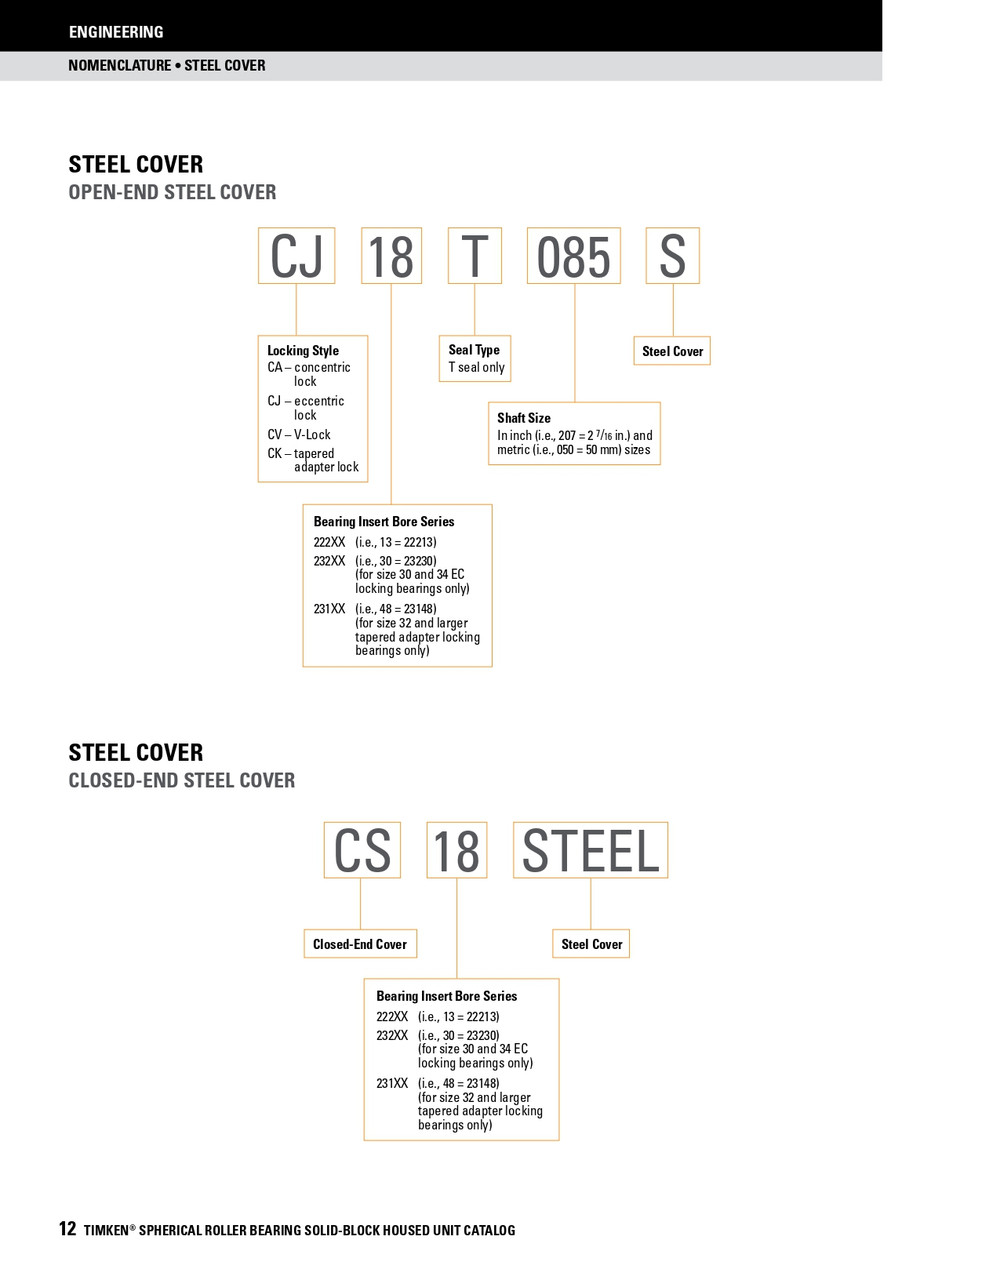 2" Timken SRB Steel Open End Cover w/Teflon Seal - QV V-Lock® Type   CV11T200S